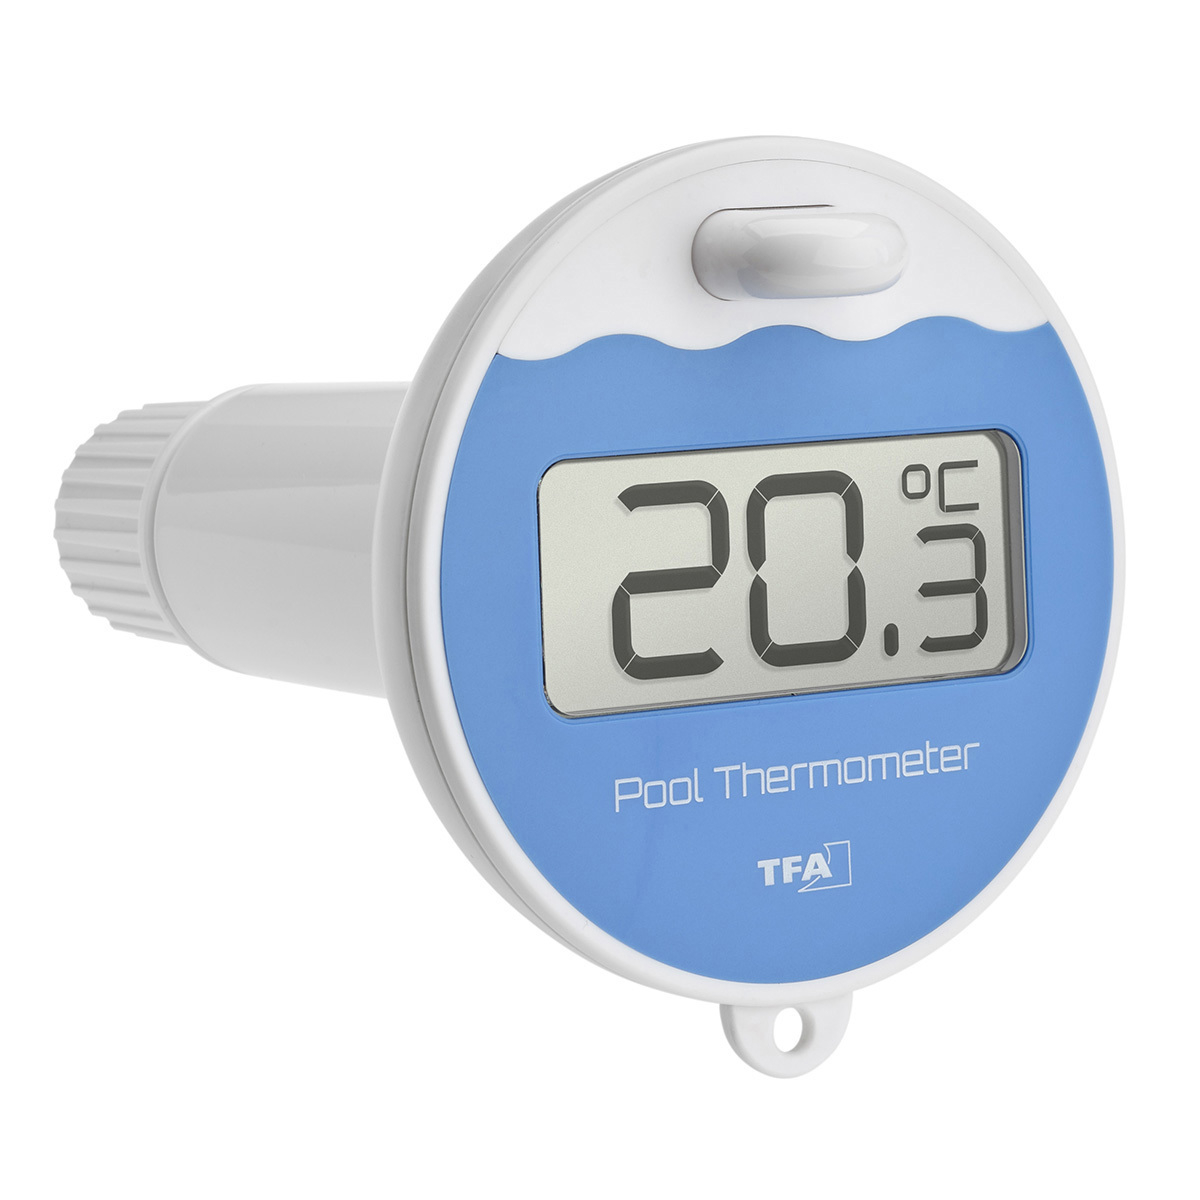 Wireless pool thermometer MARBELLA